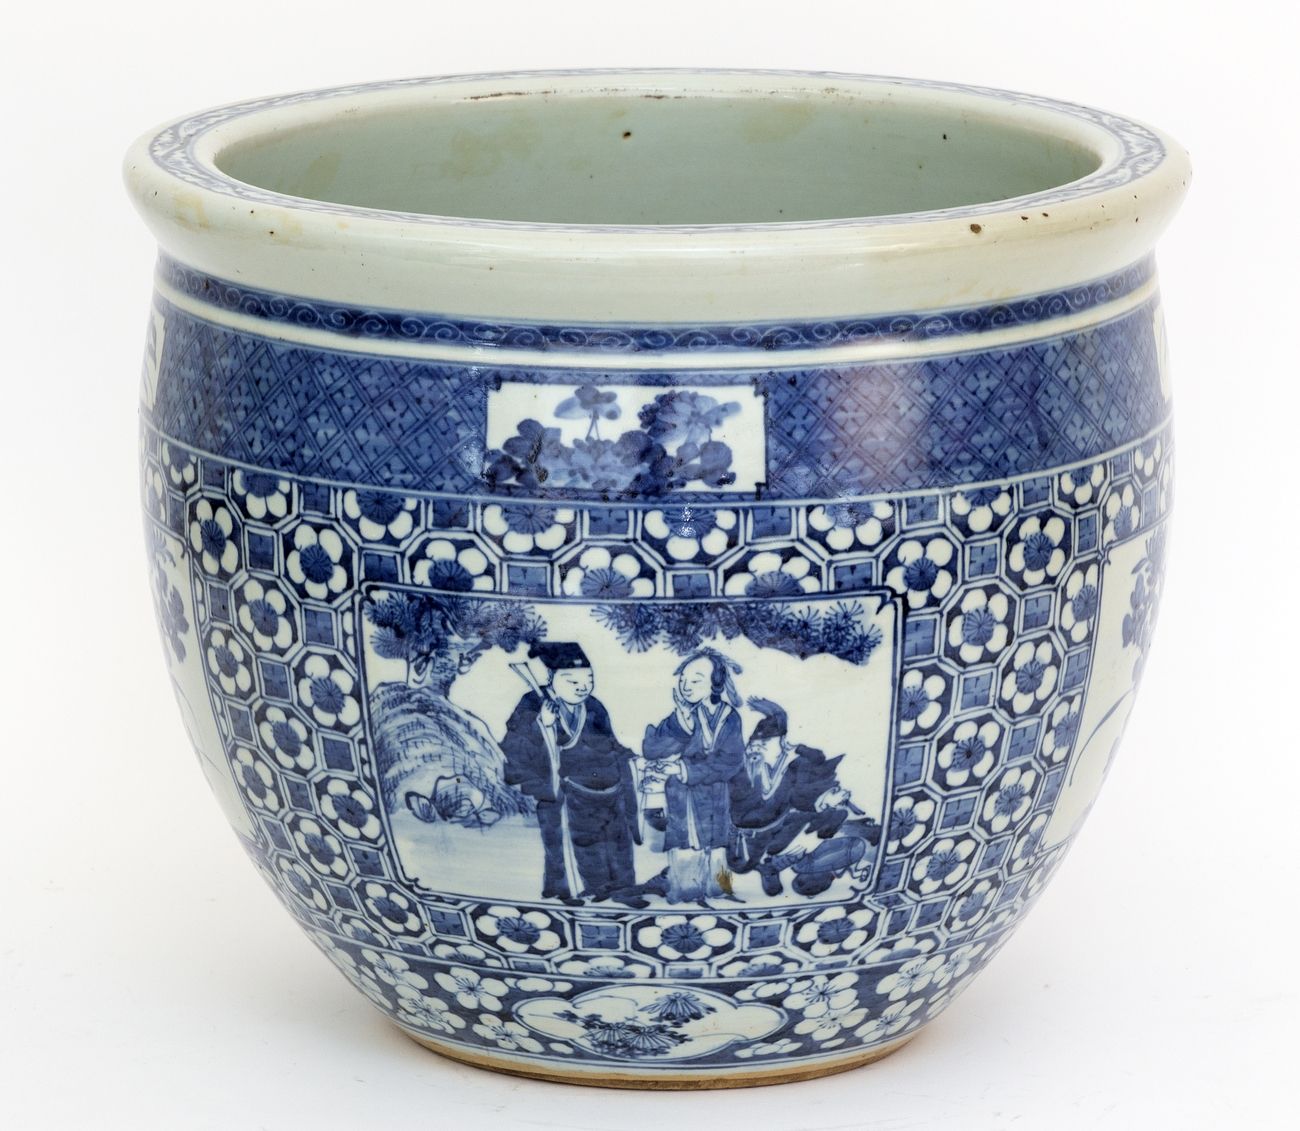 Null 中国，19世纪
瓷器盖壶，青白珐琅彩装饰的人物和植物的卡口。
高度：31厘米。 直径：37厘米